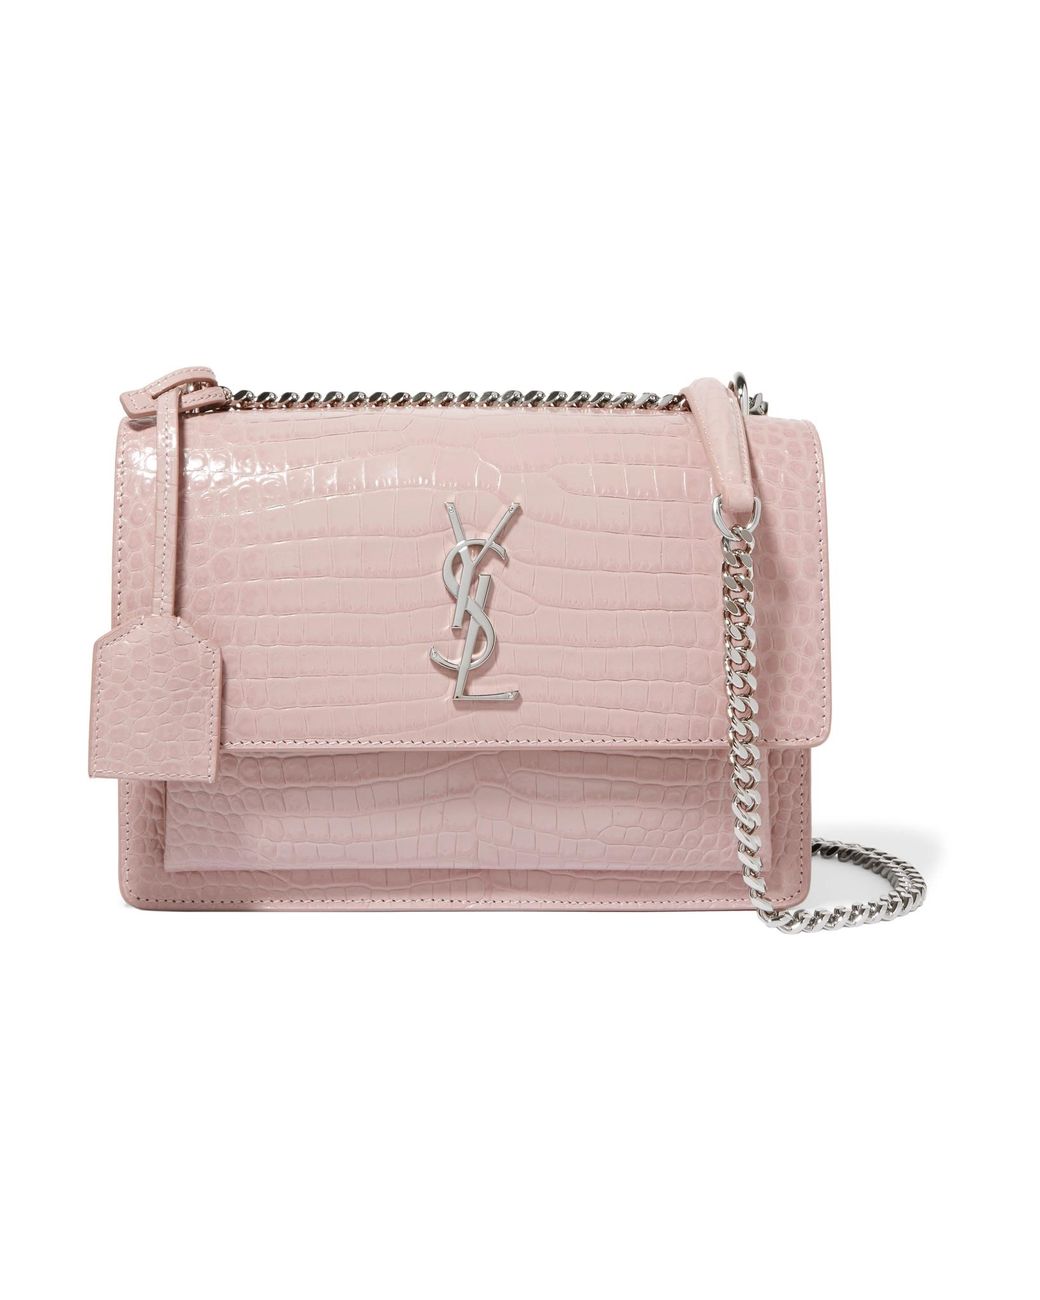 Saint Laurent Sunset Medium Croc-effect Leather Shoulder Bag in Pink | Lyst